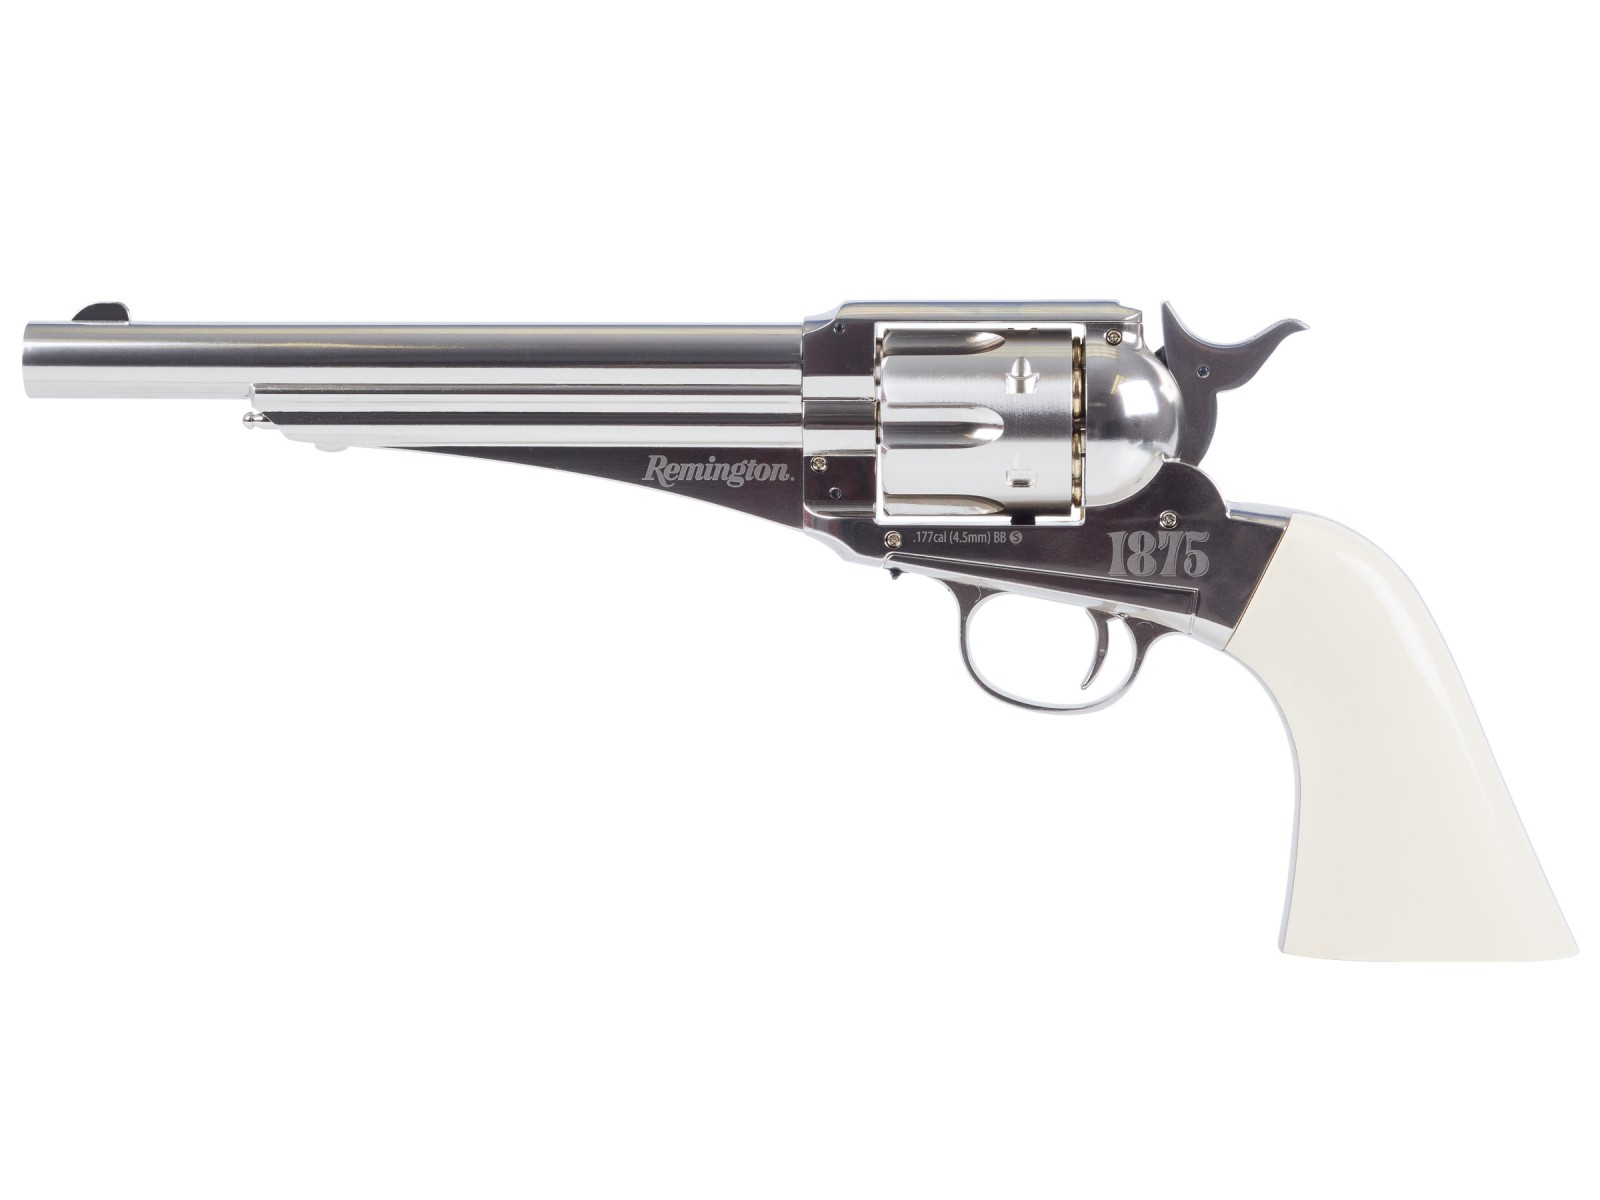 Number #9 Best BB Guns for Kids - Remington 1875